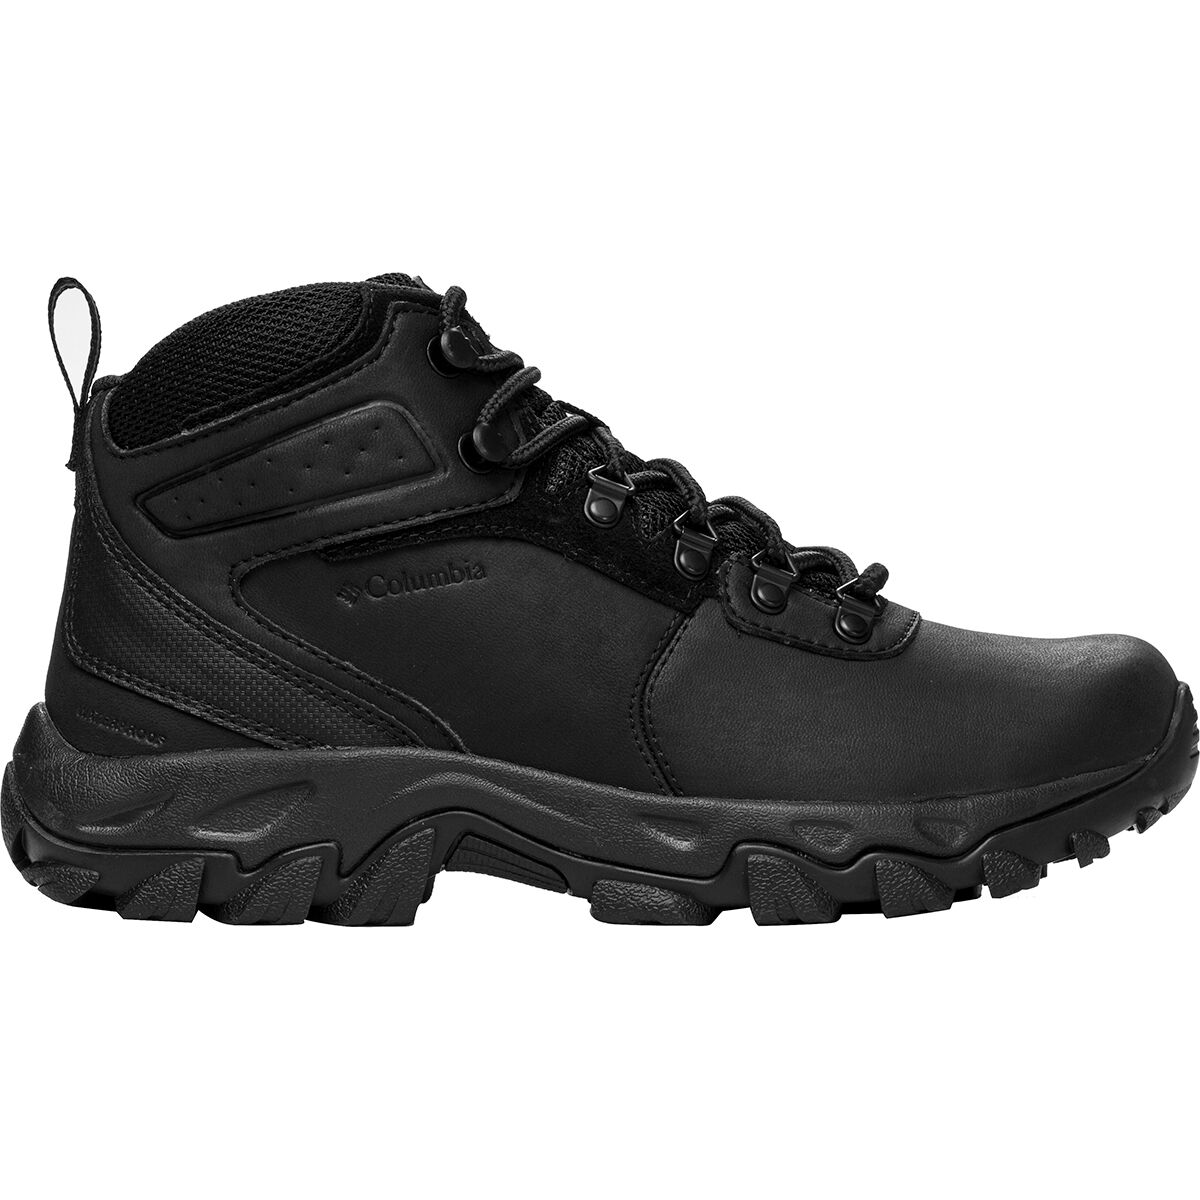 Newton Ridge Plus II Waterproof Hiking Boot - Men